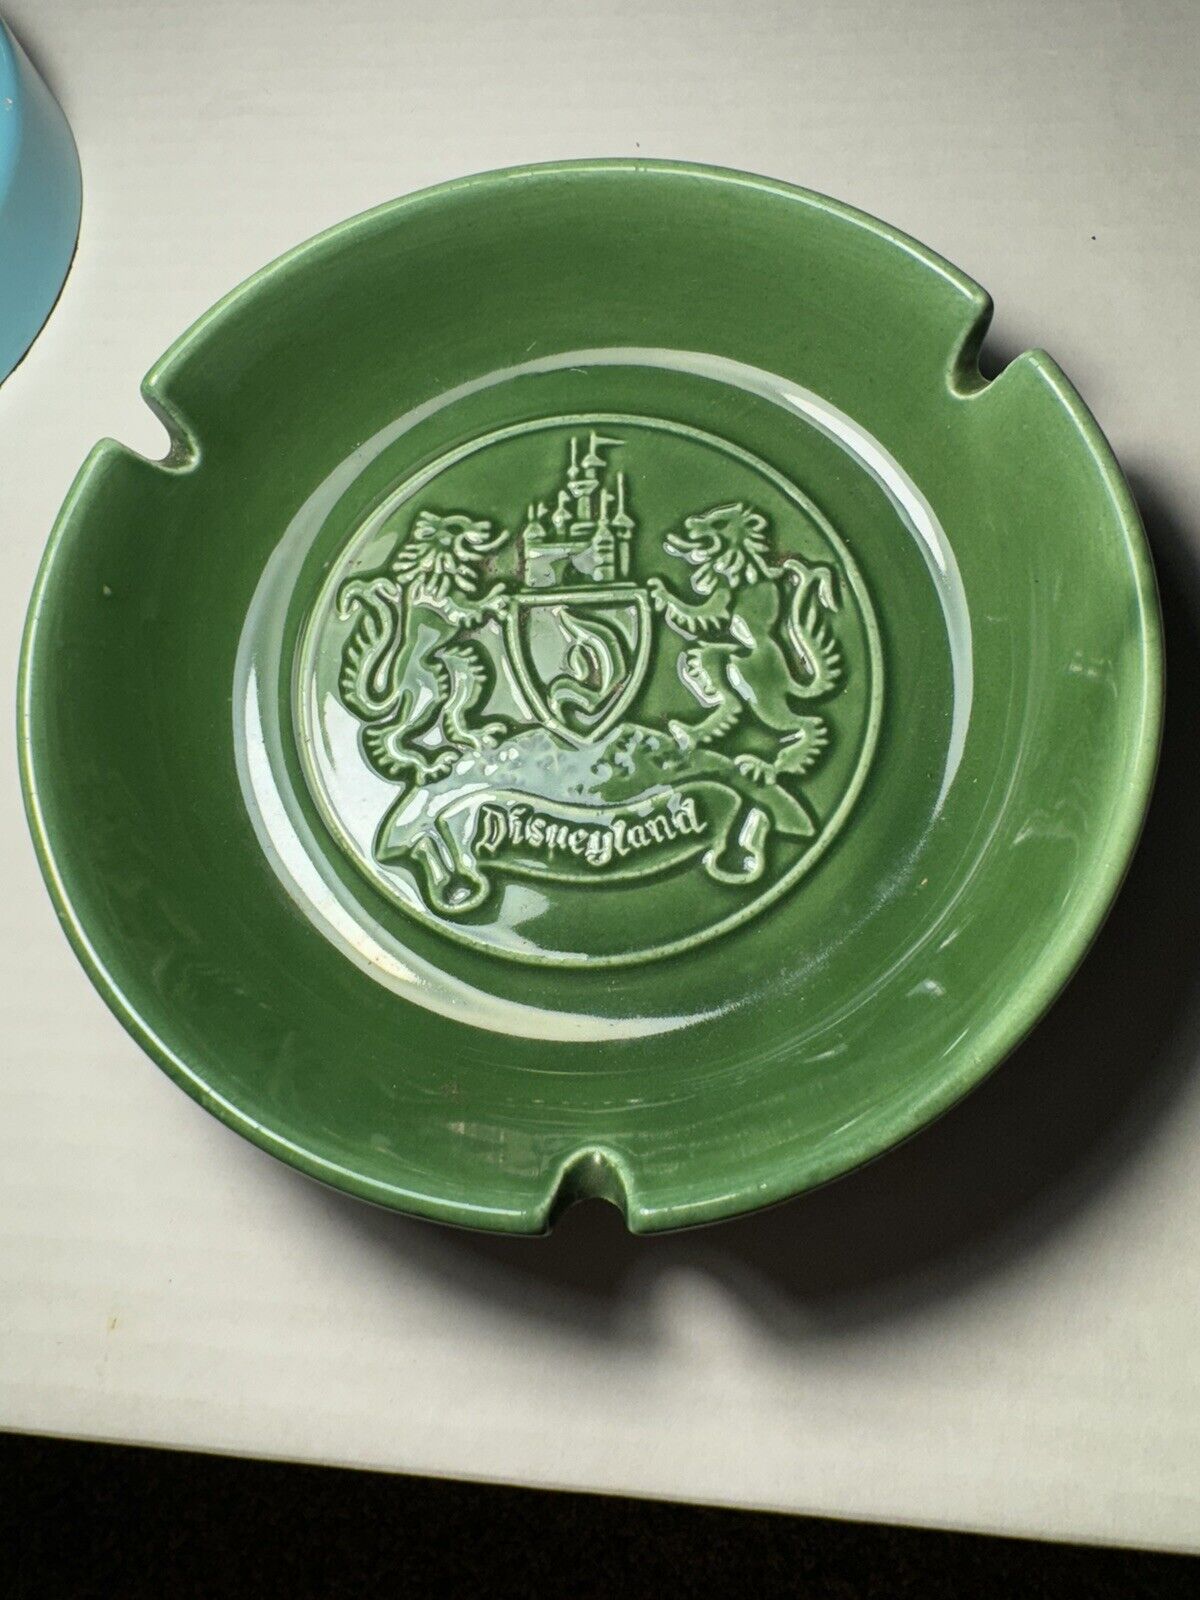 Vintage 1960’s Disneyland Ashtray - Green  Drip Glaze- Ceramic -